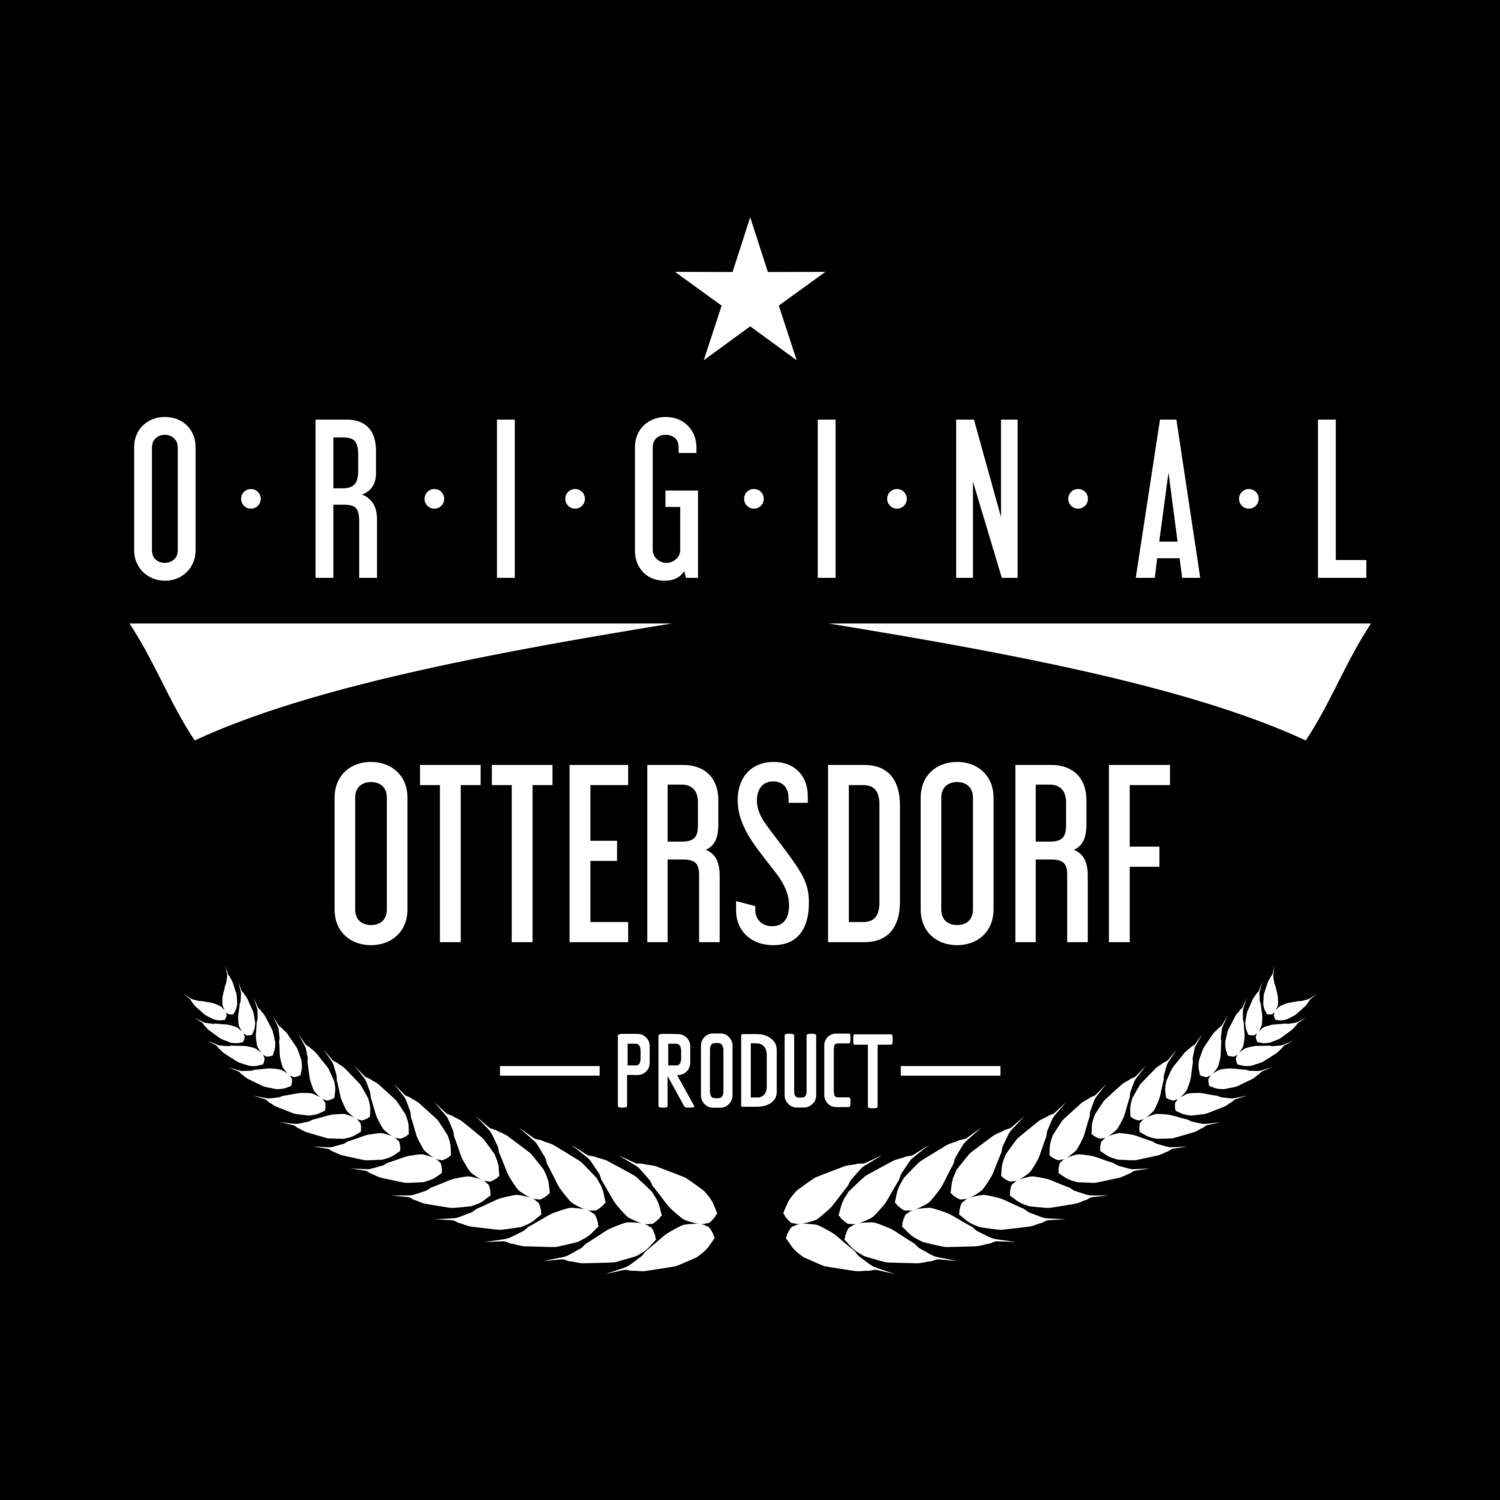 Ottersdorf T-Shirt »Original Product«